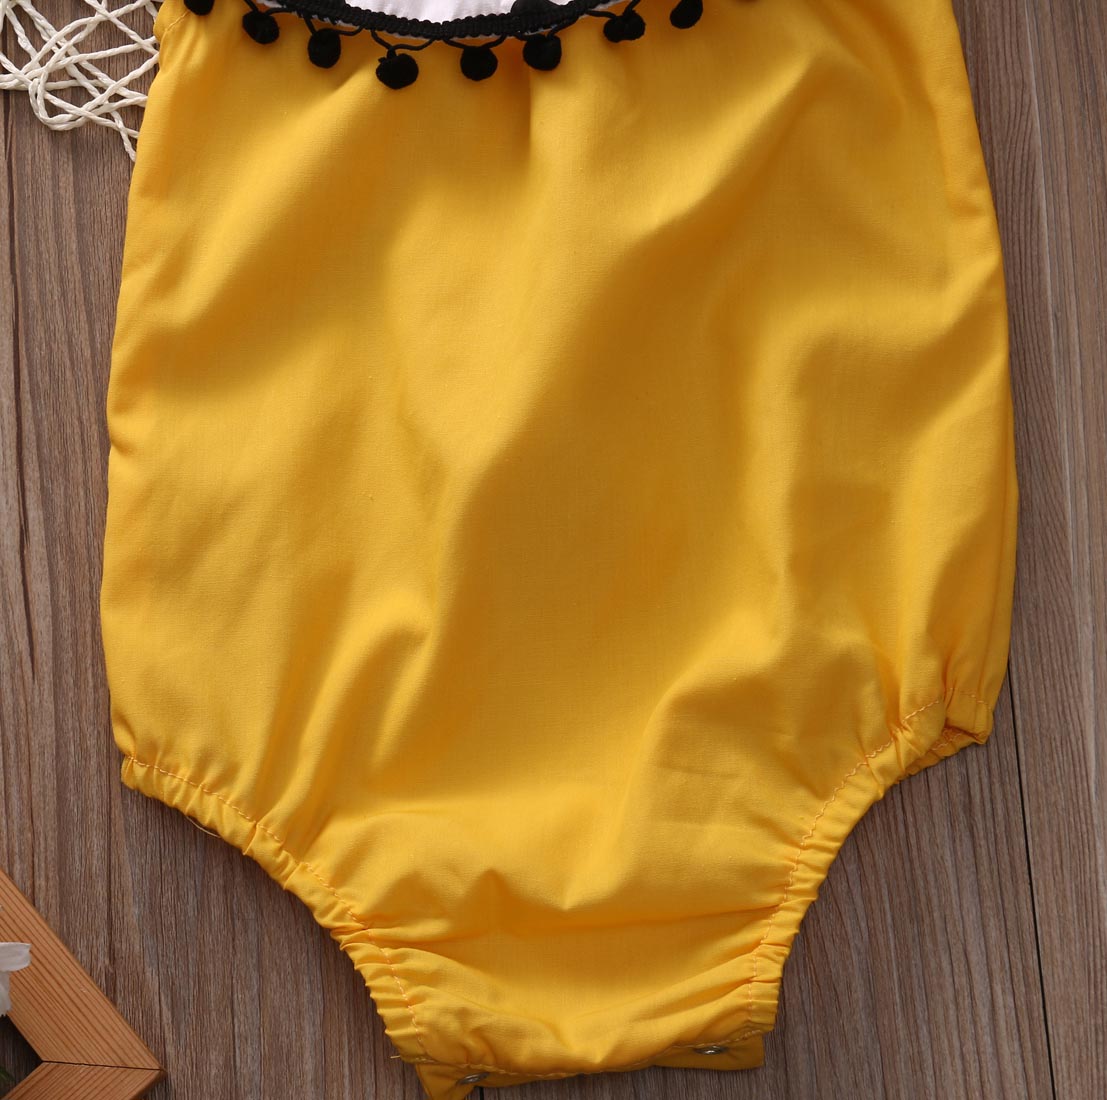 Summer Baby Girls Bodysuit Kids Sleeeless Dot bodysuits Jumpsuit Outfits Sunsuit Clothes - ebowsos